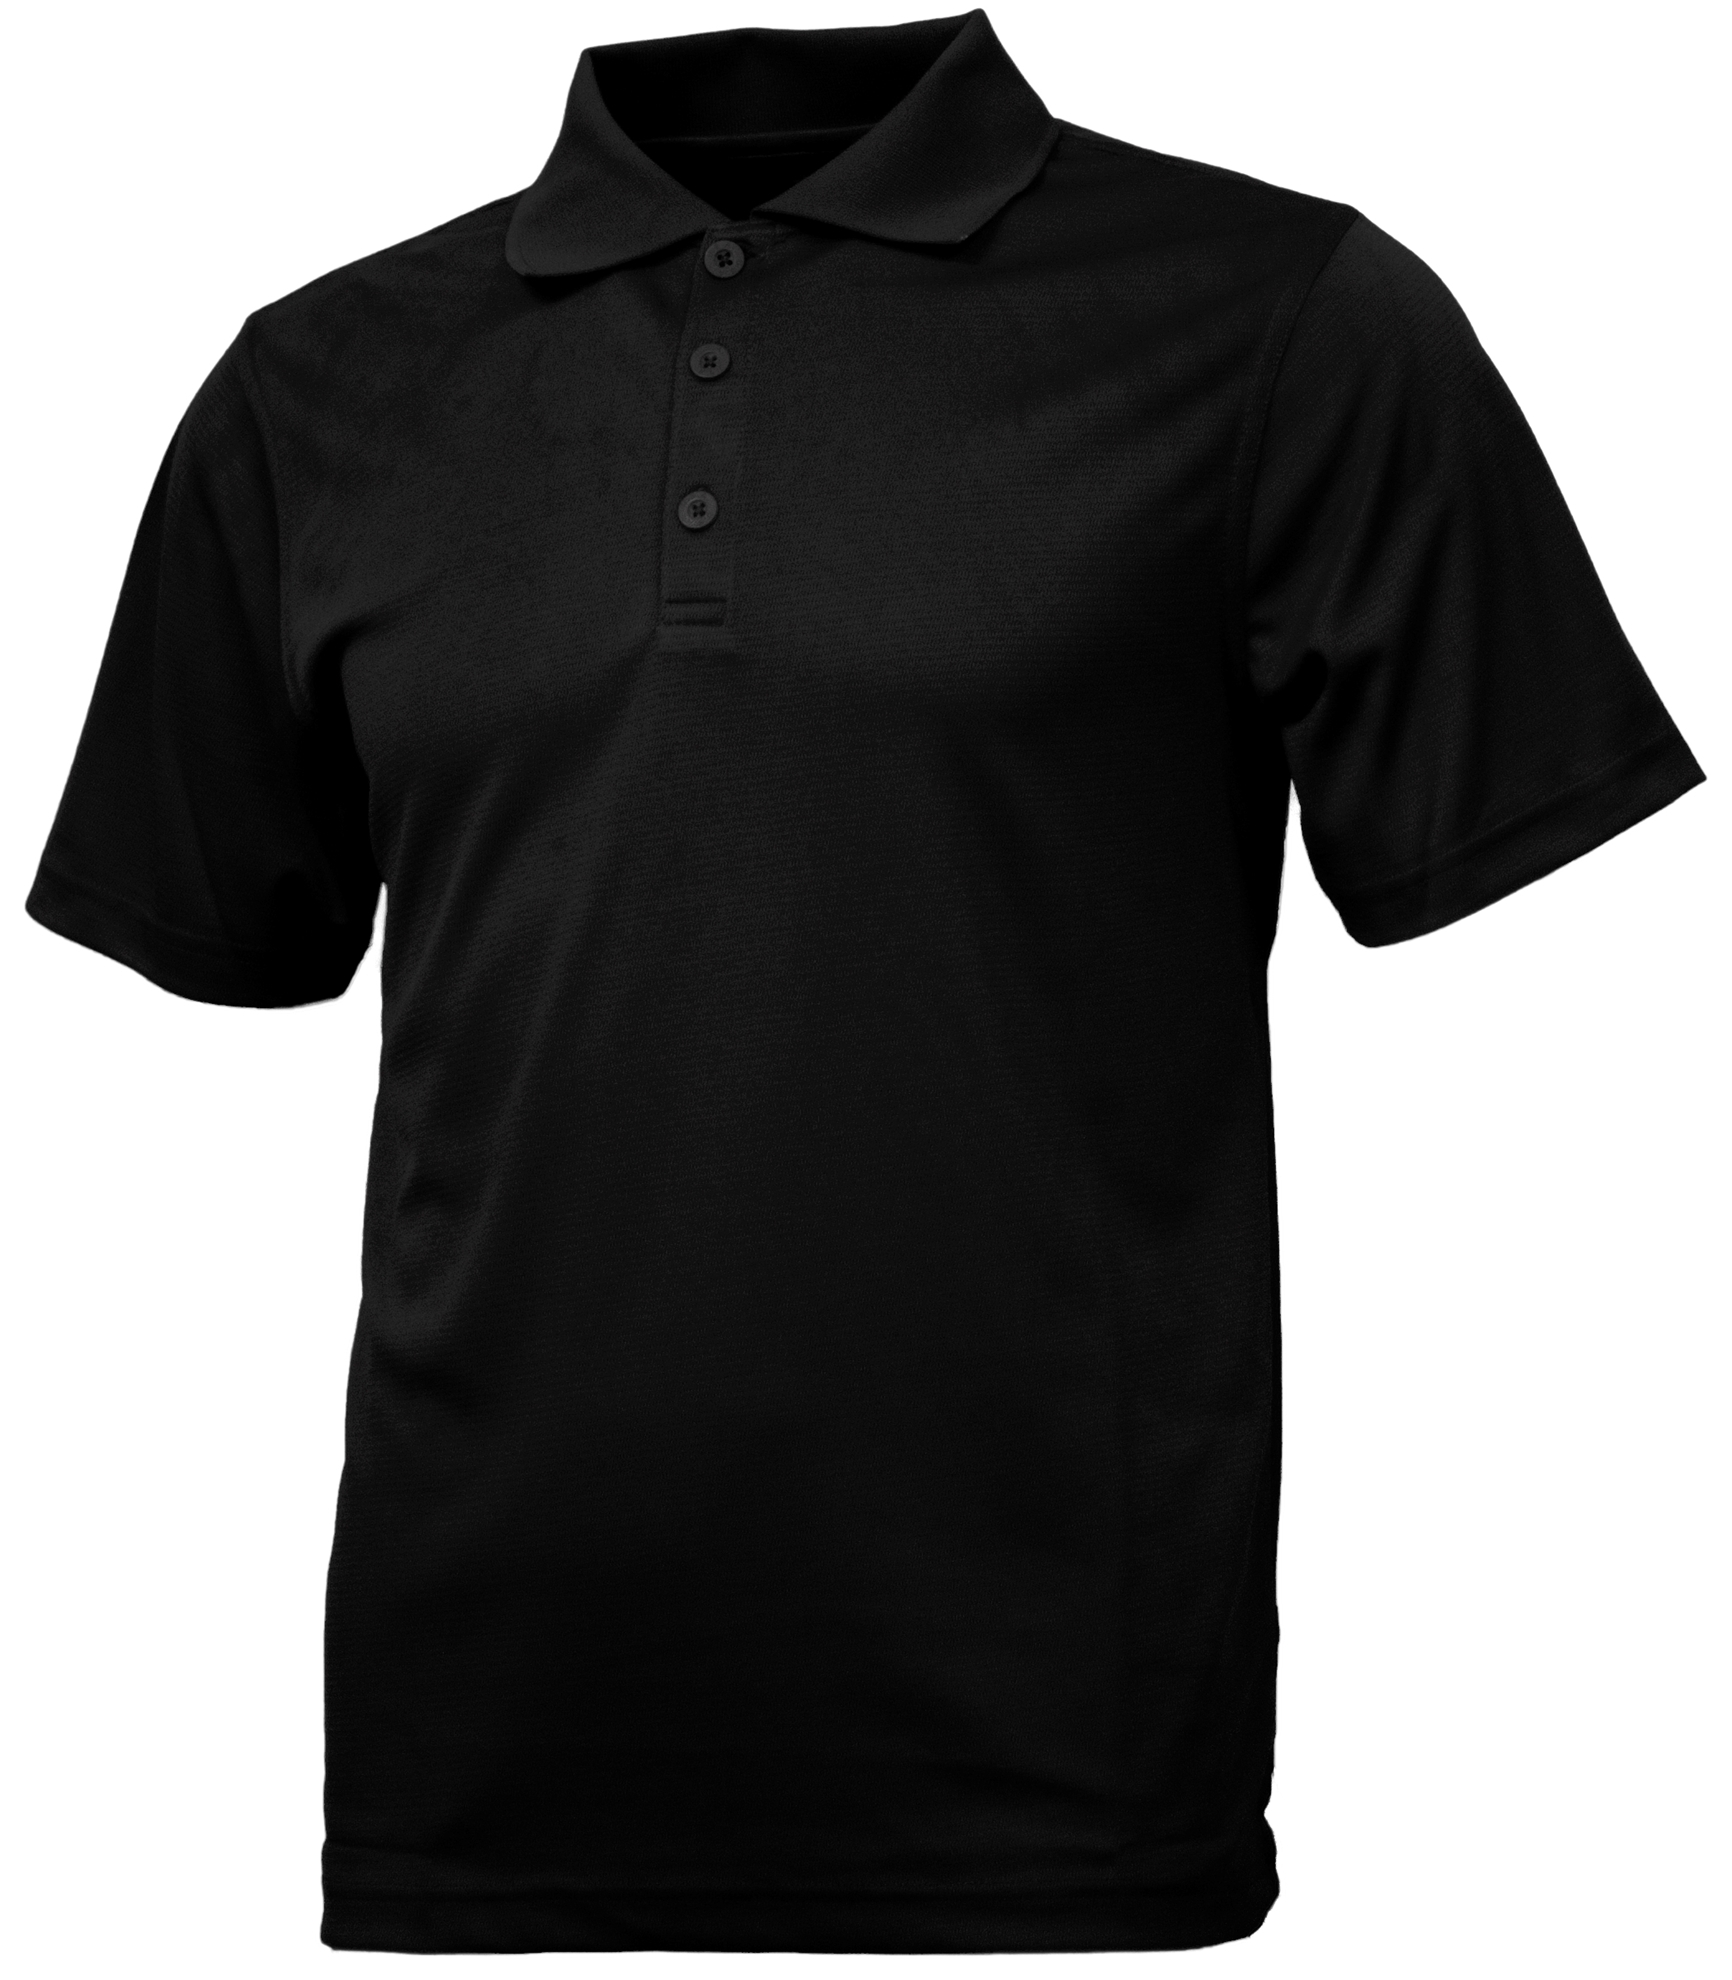 BAW Athletic Wear EC408 - Men's Cool-Tek Short Sleeve Shirt